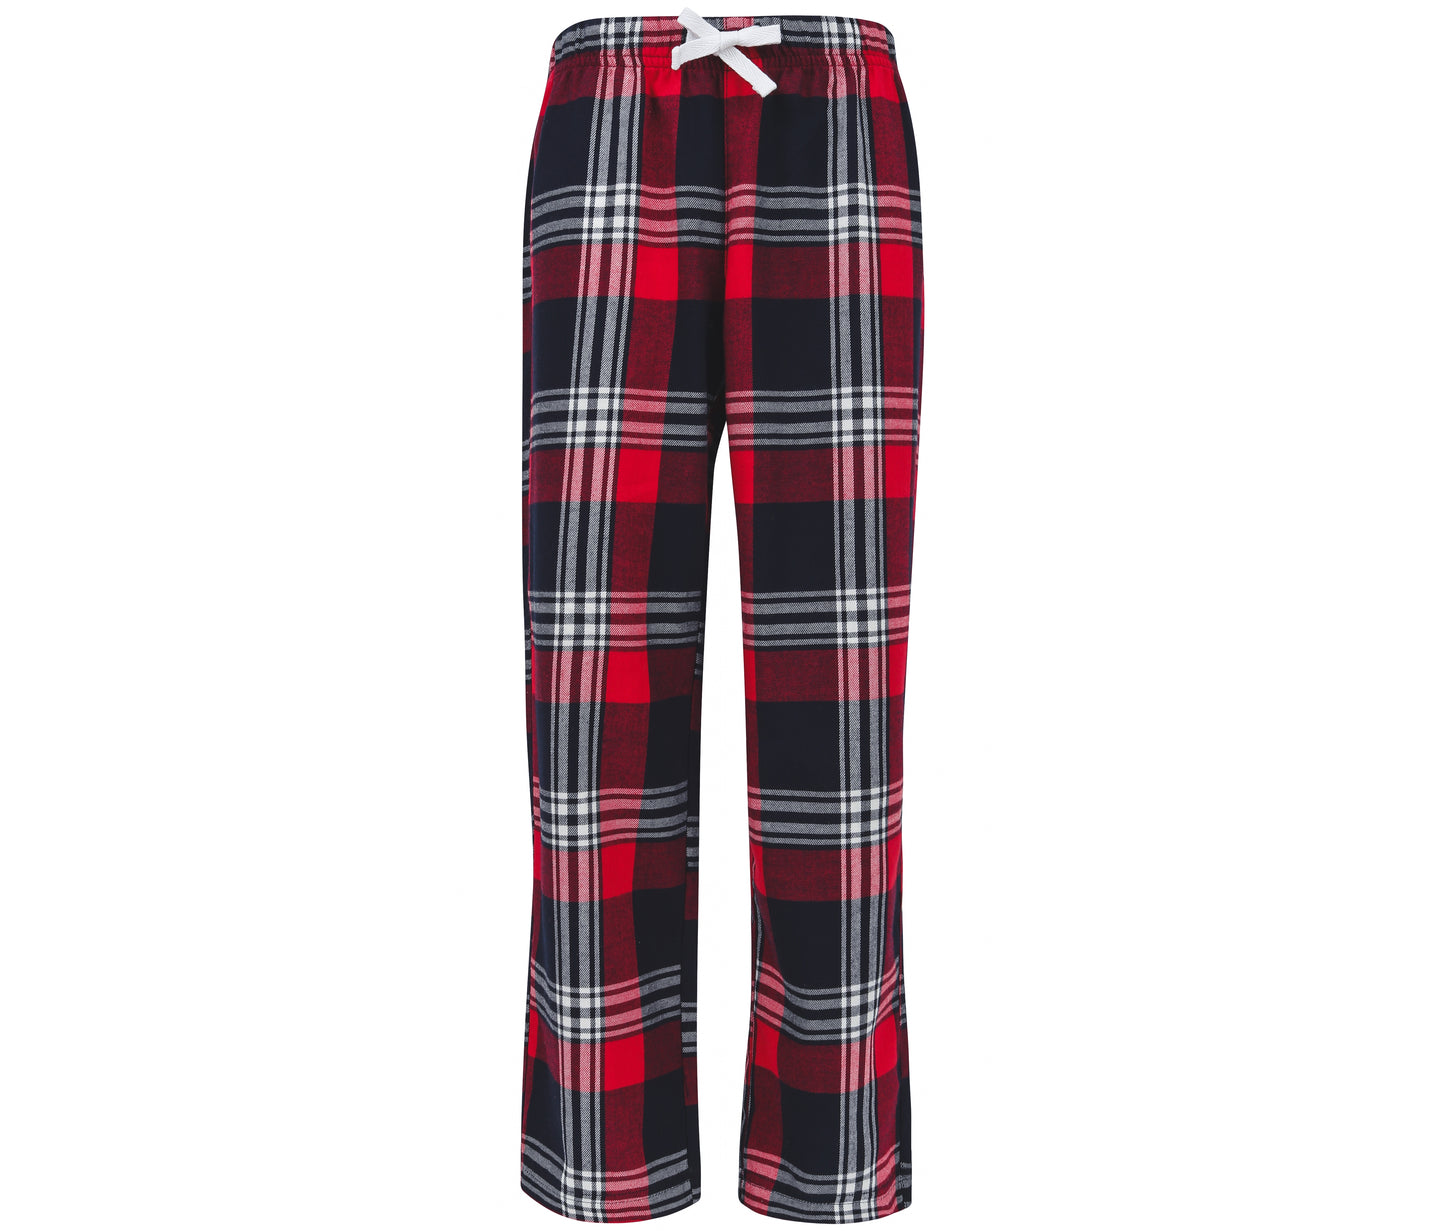 Children's pajama pants